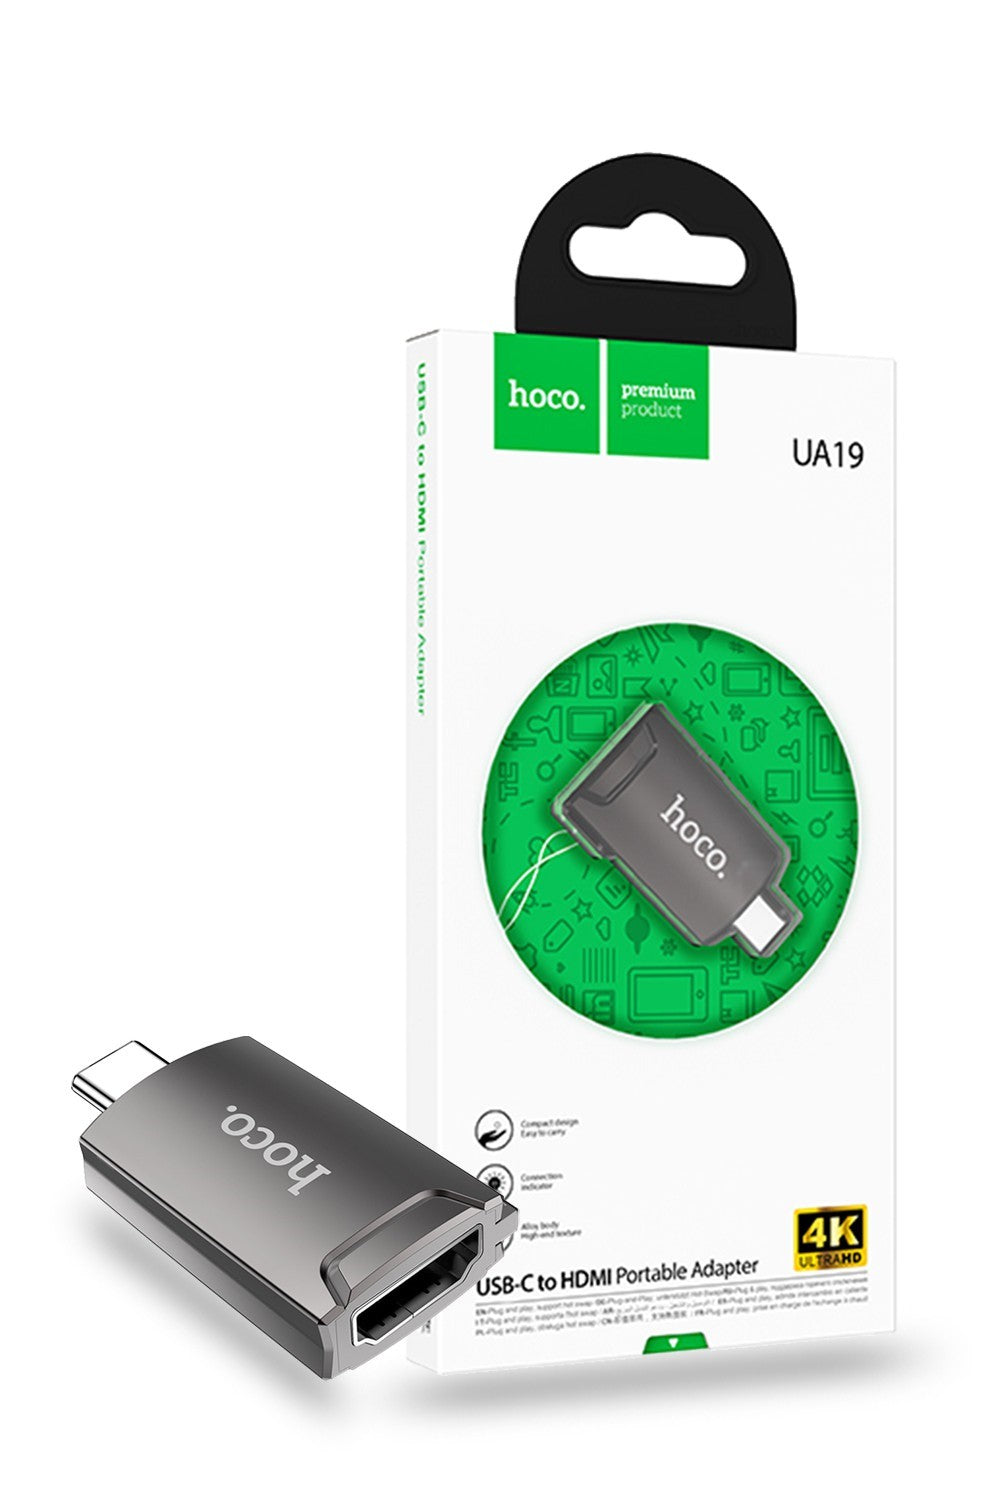 Hoco USB-C Male to HDMI Female Adapter UA19